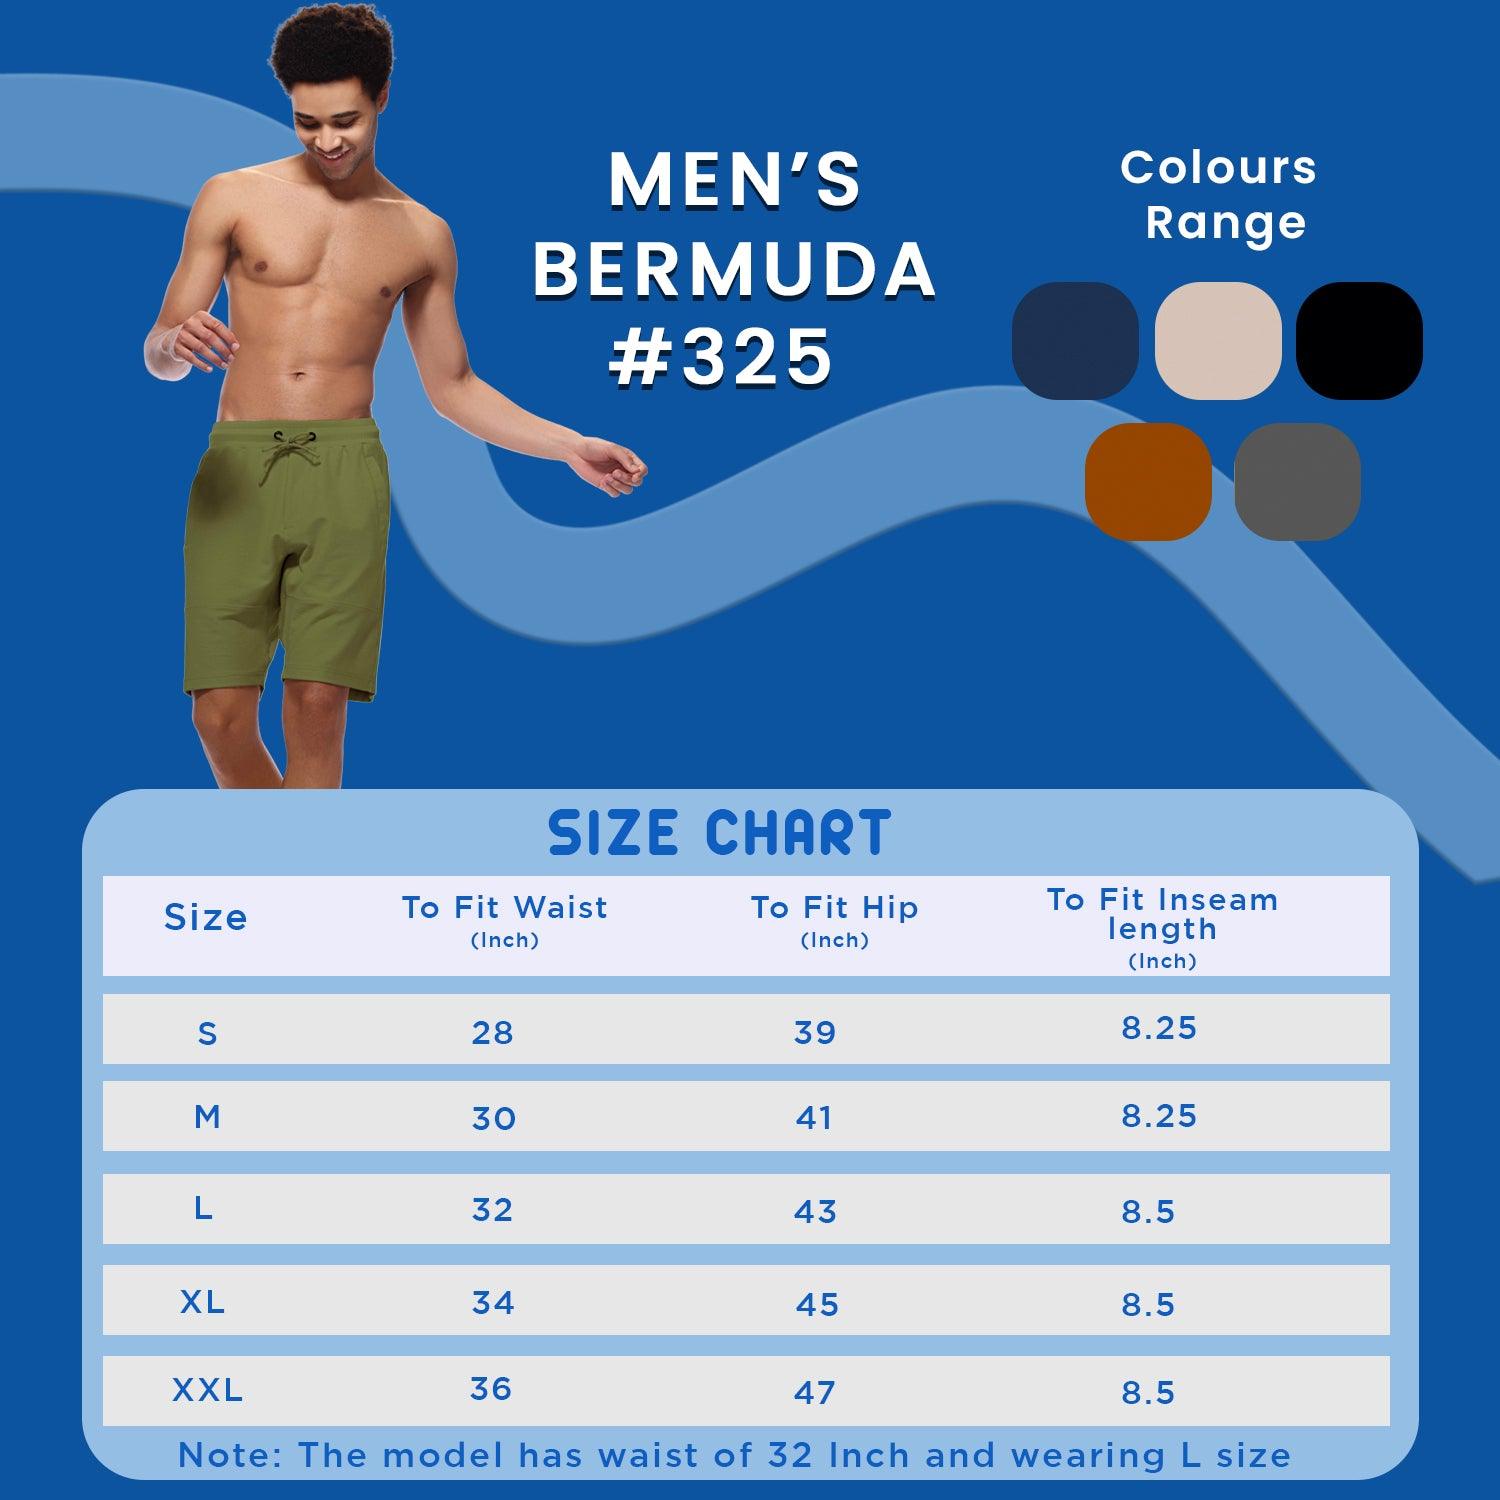 Sporto Men's Cotton Bermuda Shorts - Charcoal Grey